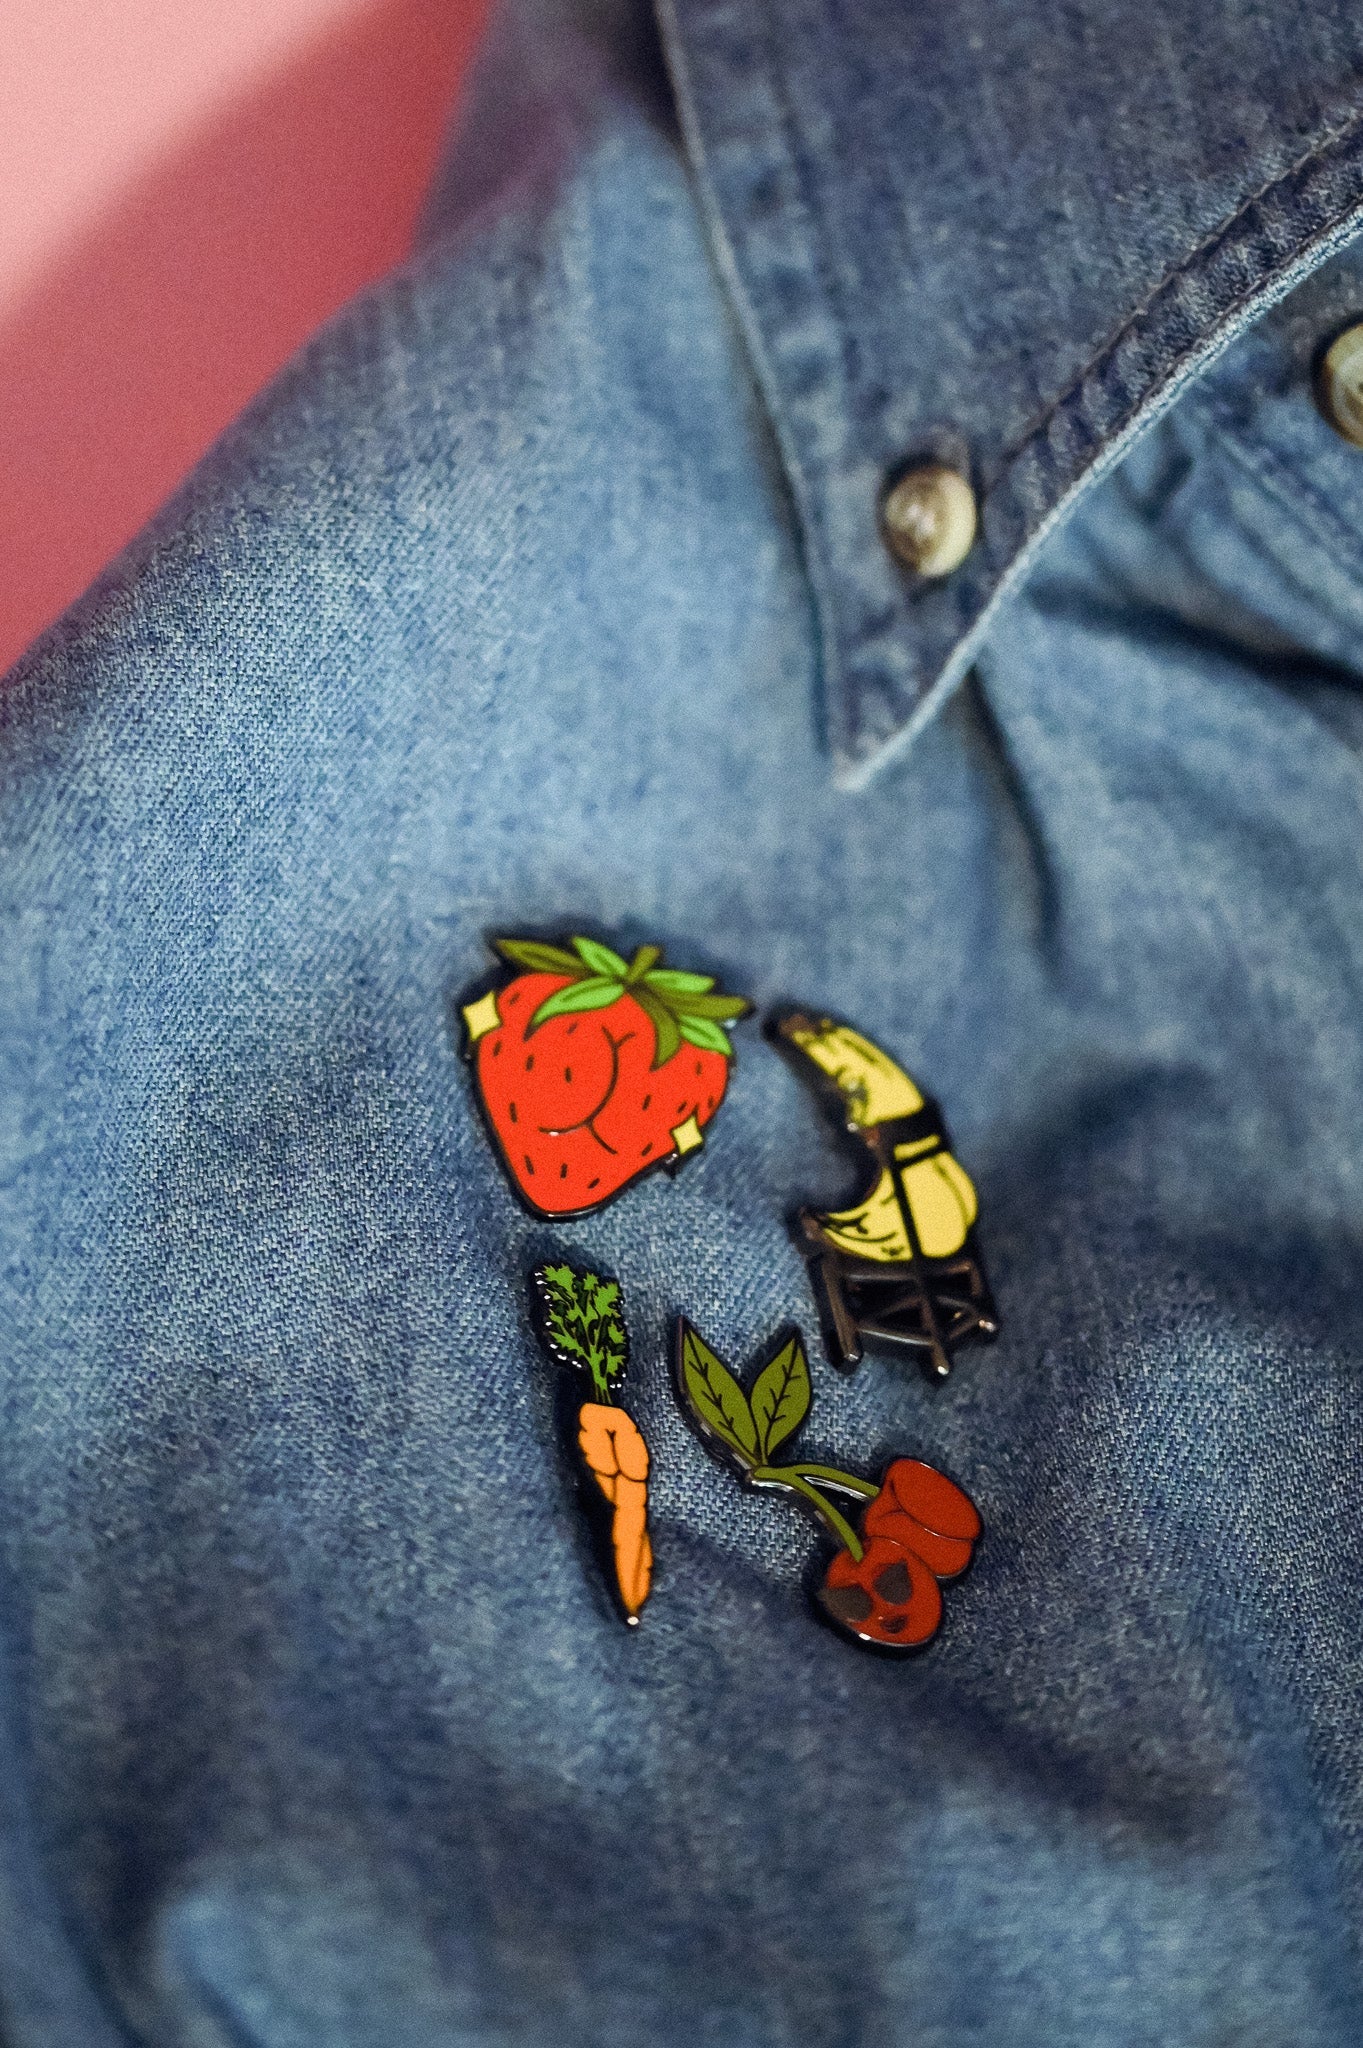 Strawbooty Enamel Pin - Cheeky Art Studio-pin-strawberry-